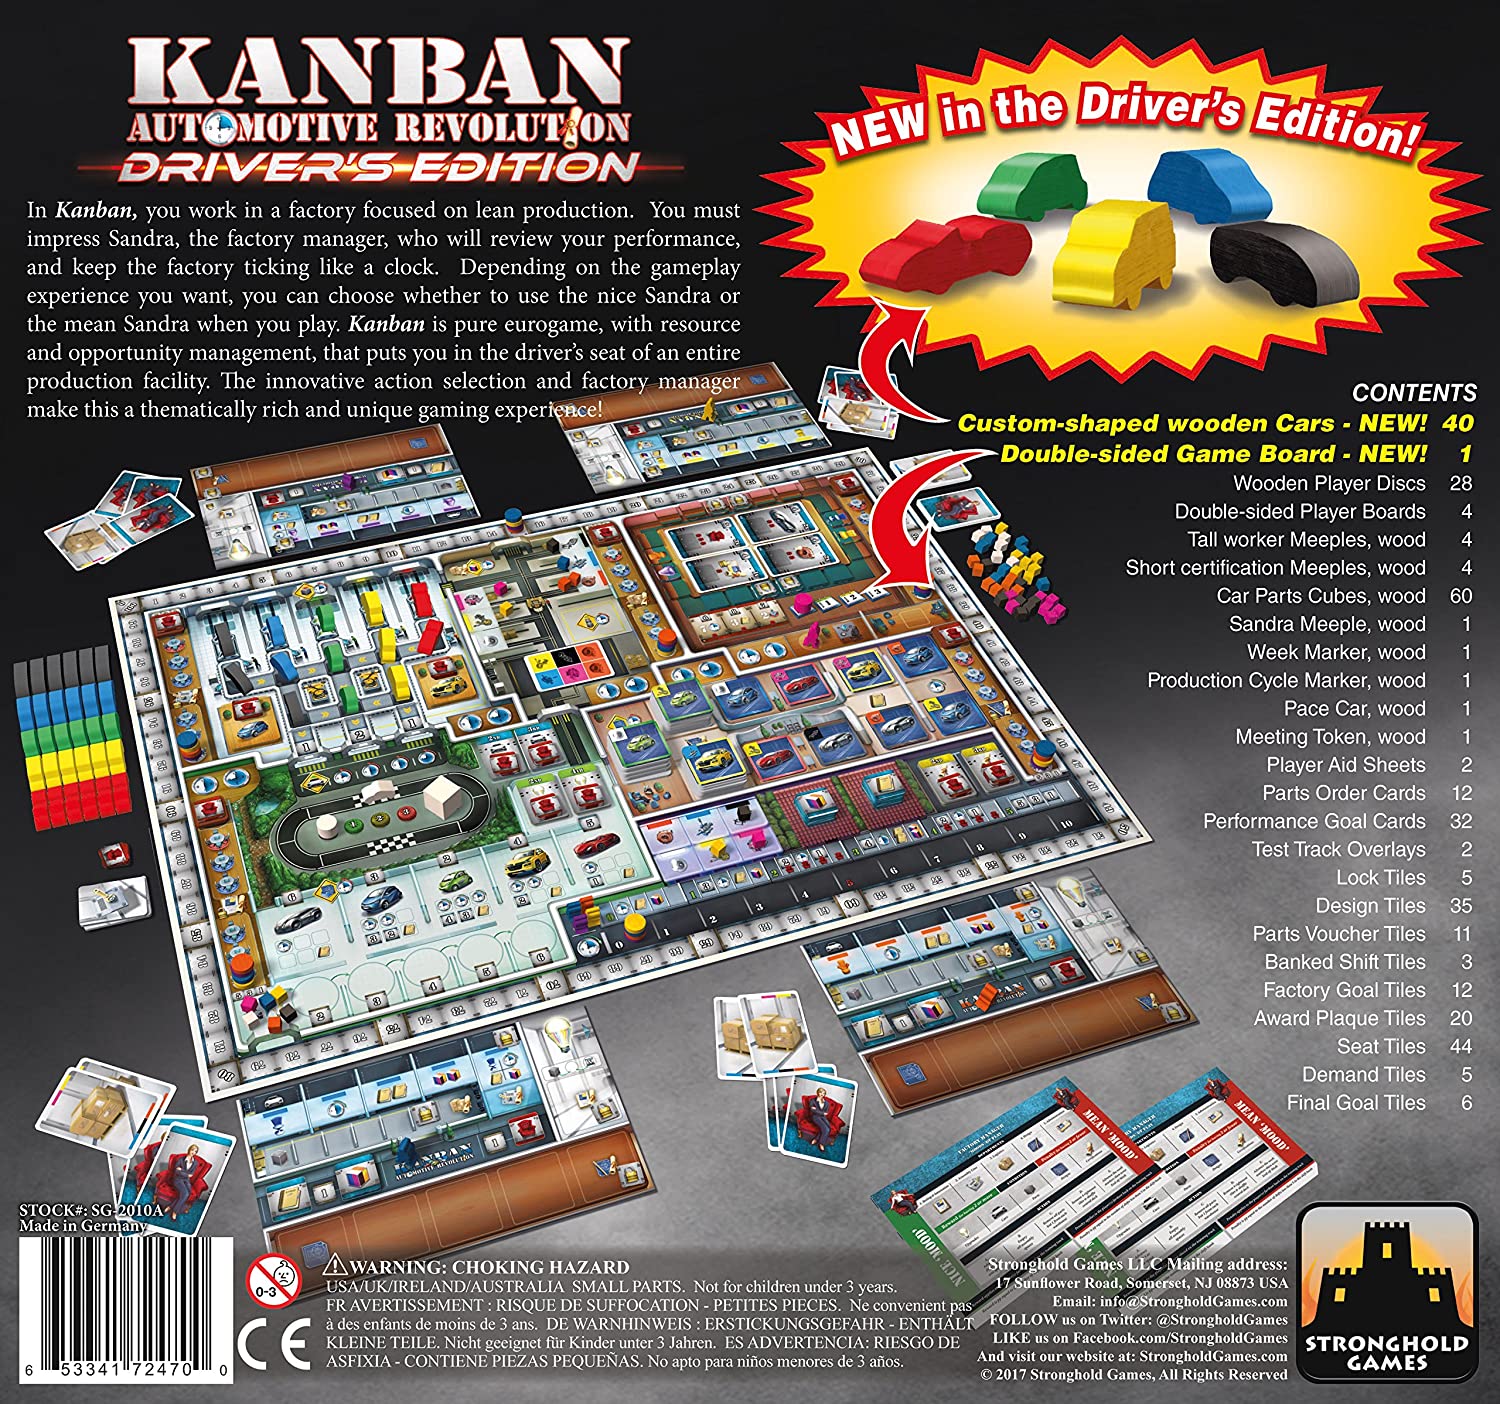 Kanban: Driver's Edition Game Image 3